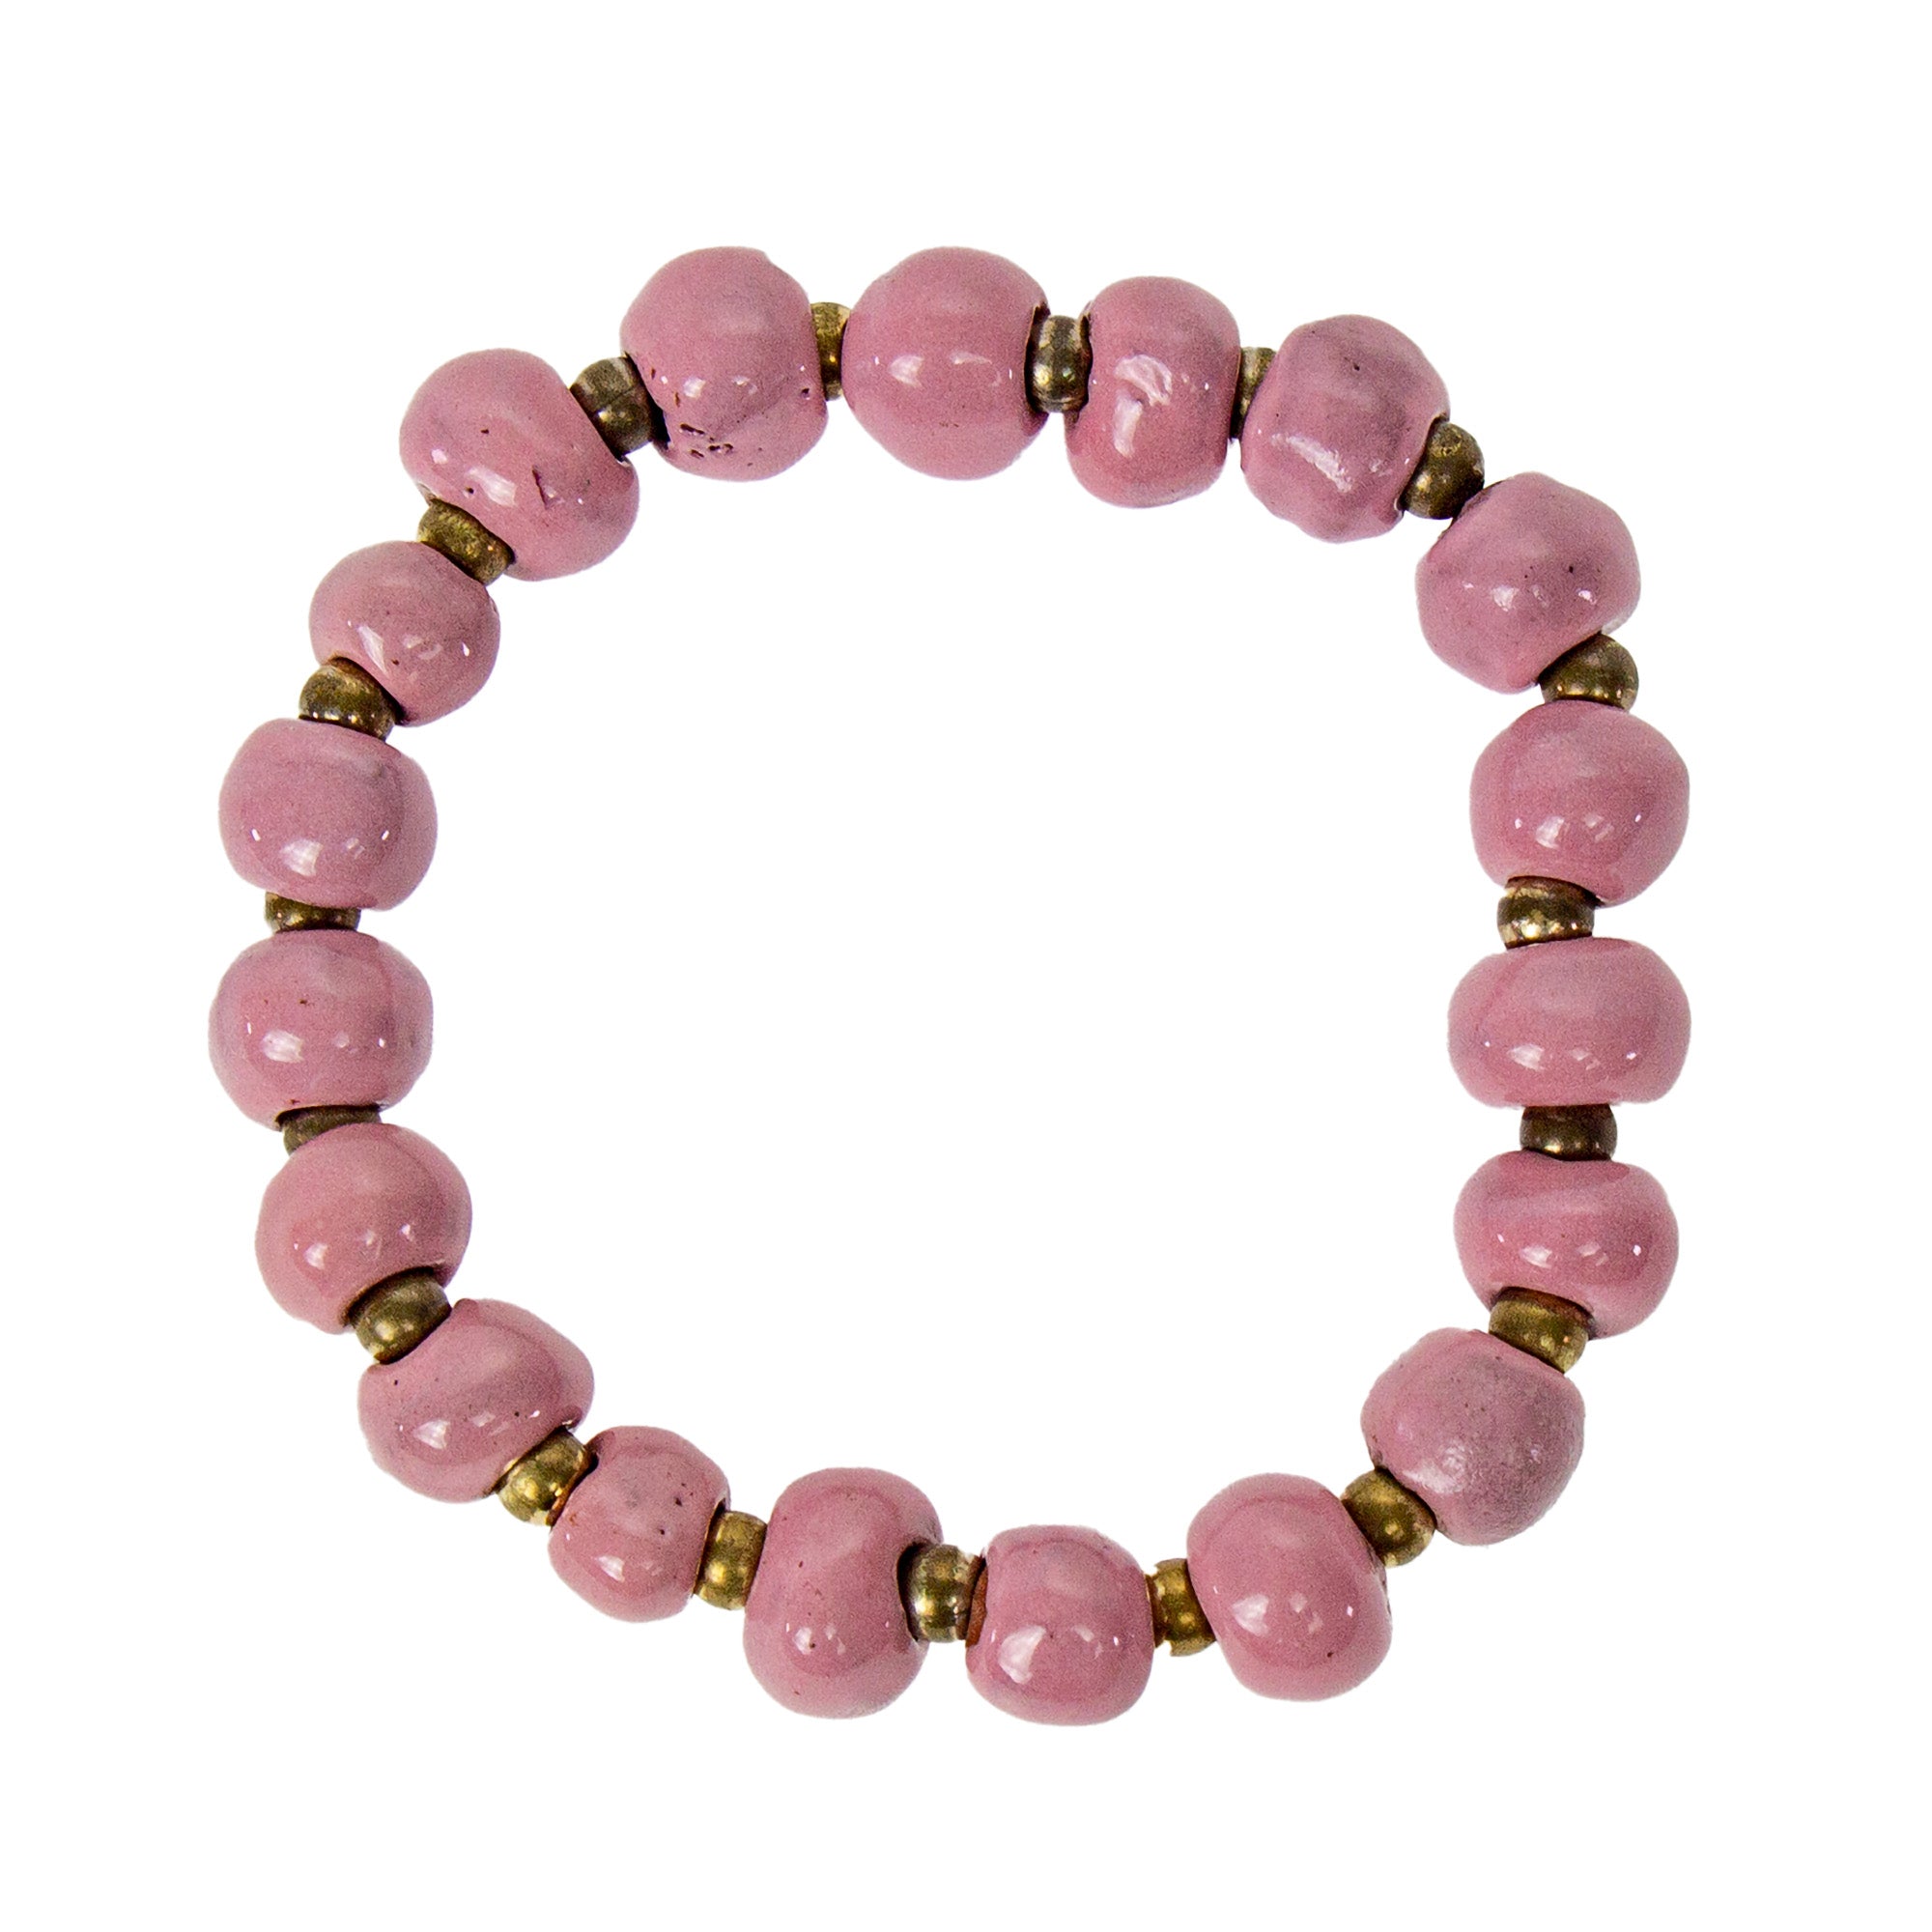 Haiti Clay Bead Bracelet, Light Pink - PACK OF 3 - Global Crafts Wholesale